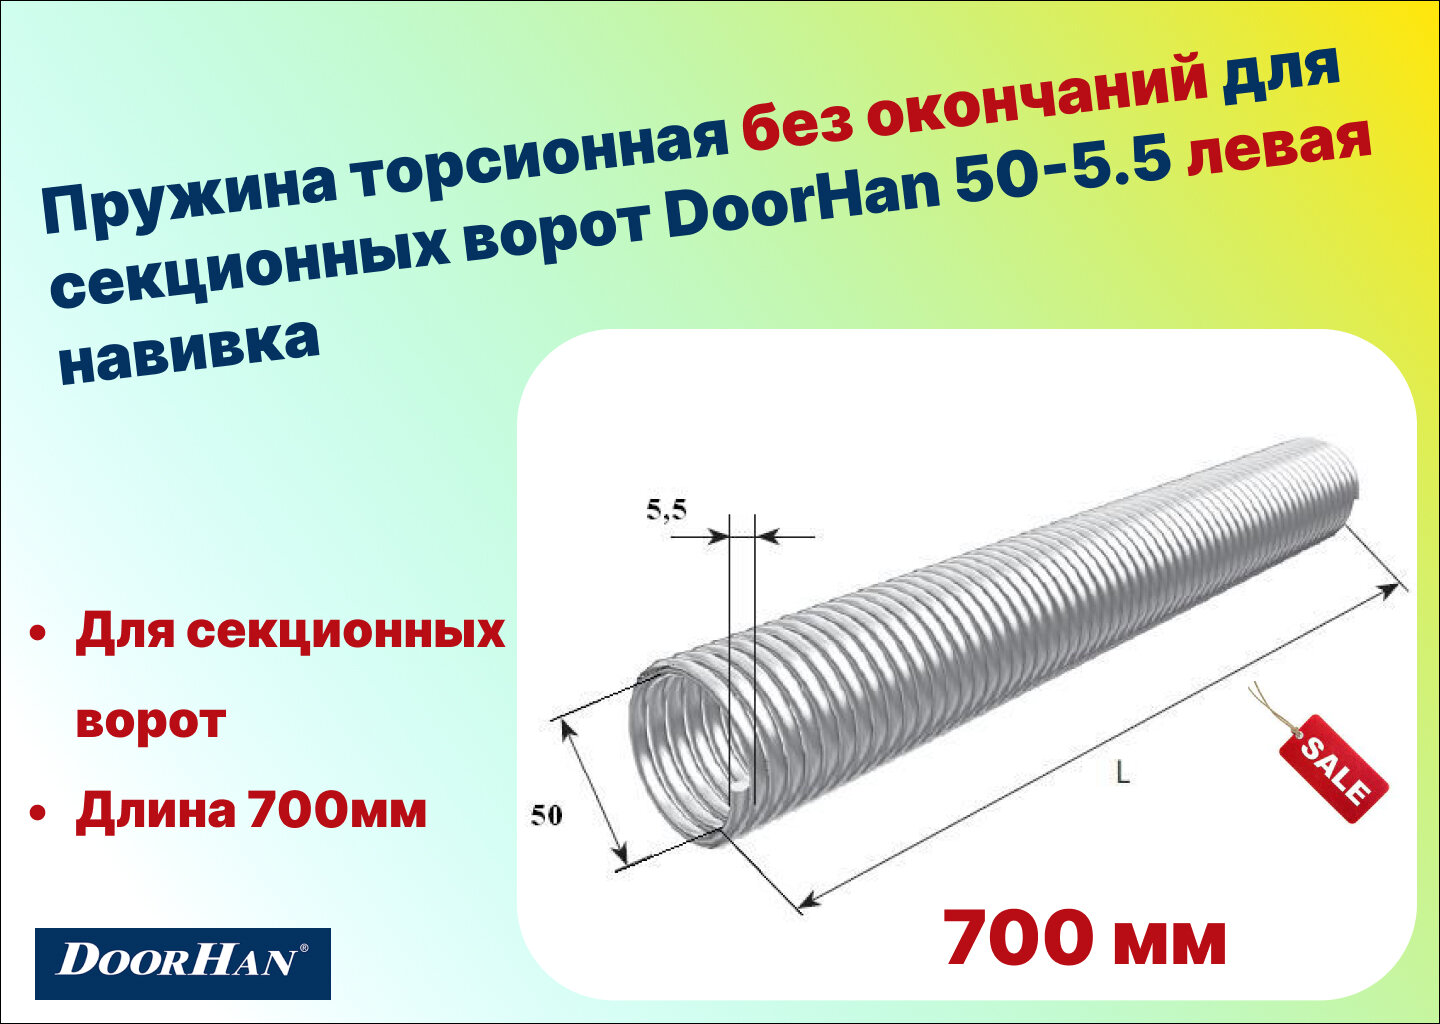 Пружина торсионная без окончаний для секционных ворот DoorHan 50-5.5 левая навивка, длина 700 мм (32055/mL/RAL7004 )